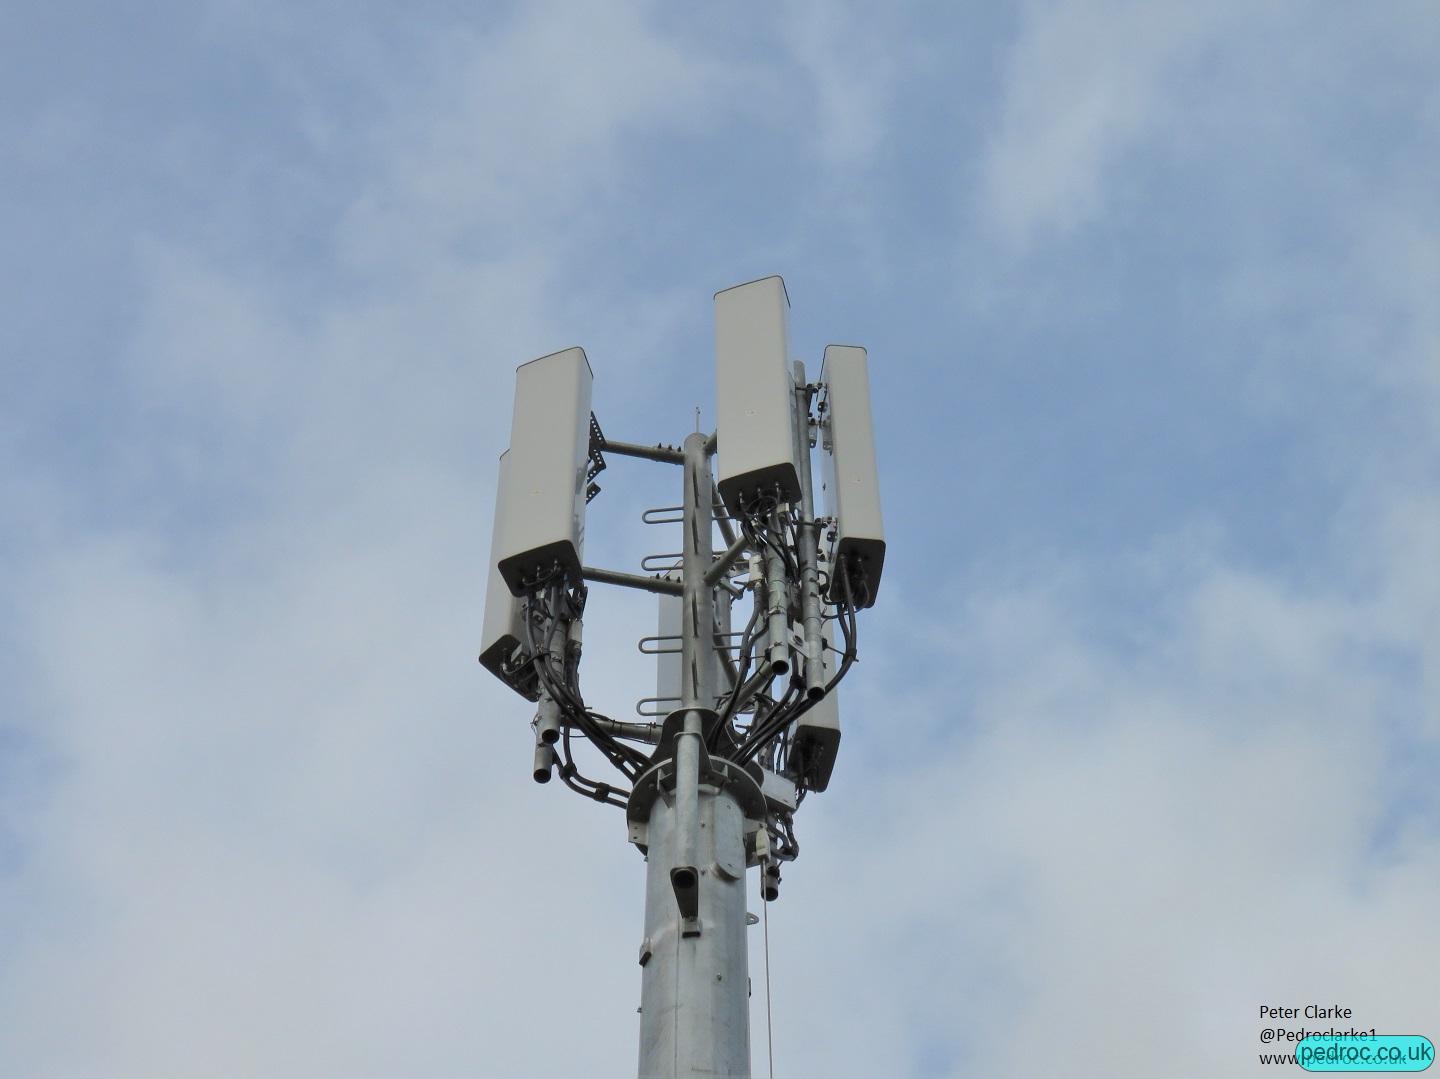 Pair of tri Band Commscope antennas per sector on the CU Phosco Mast.